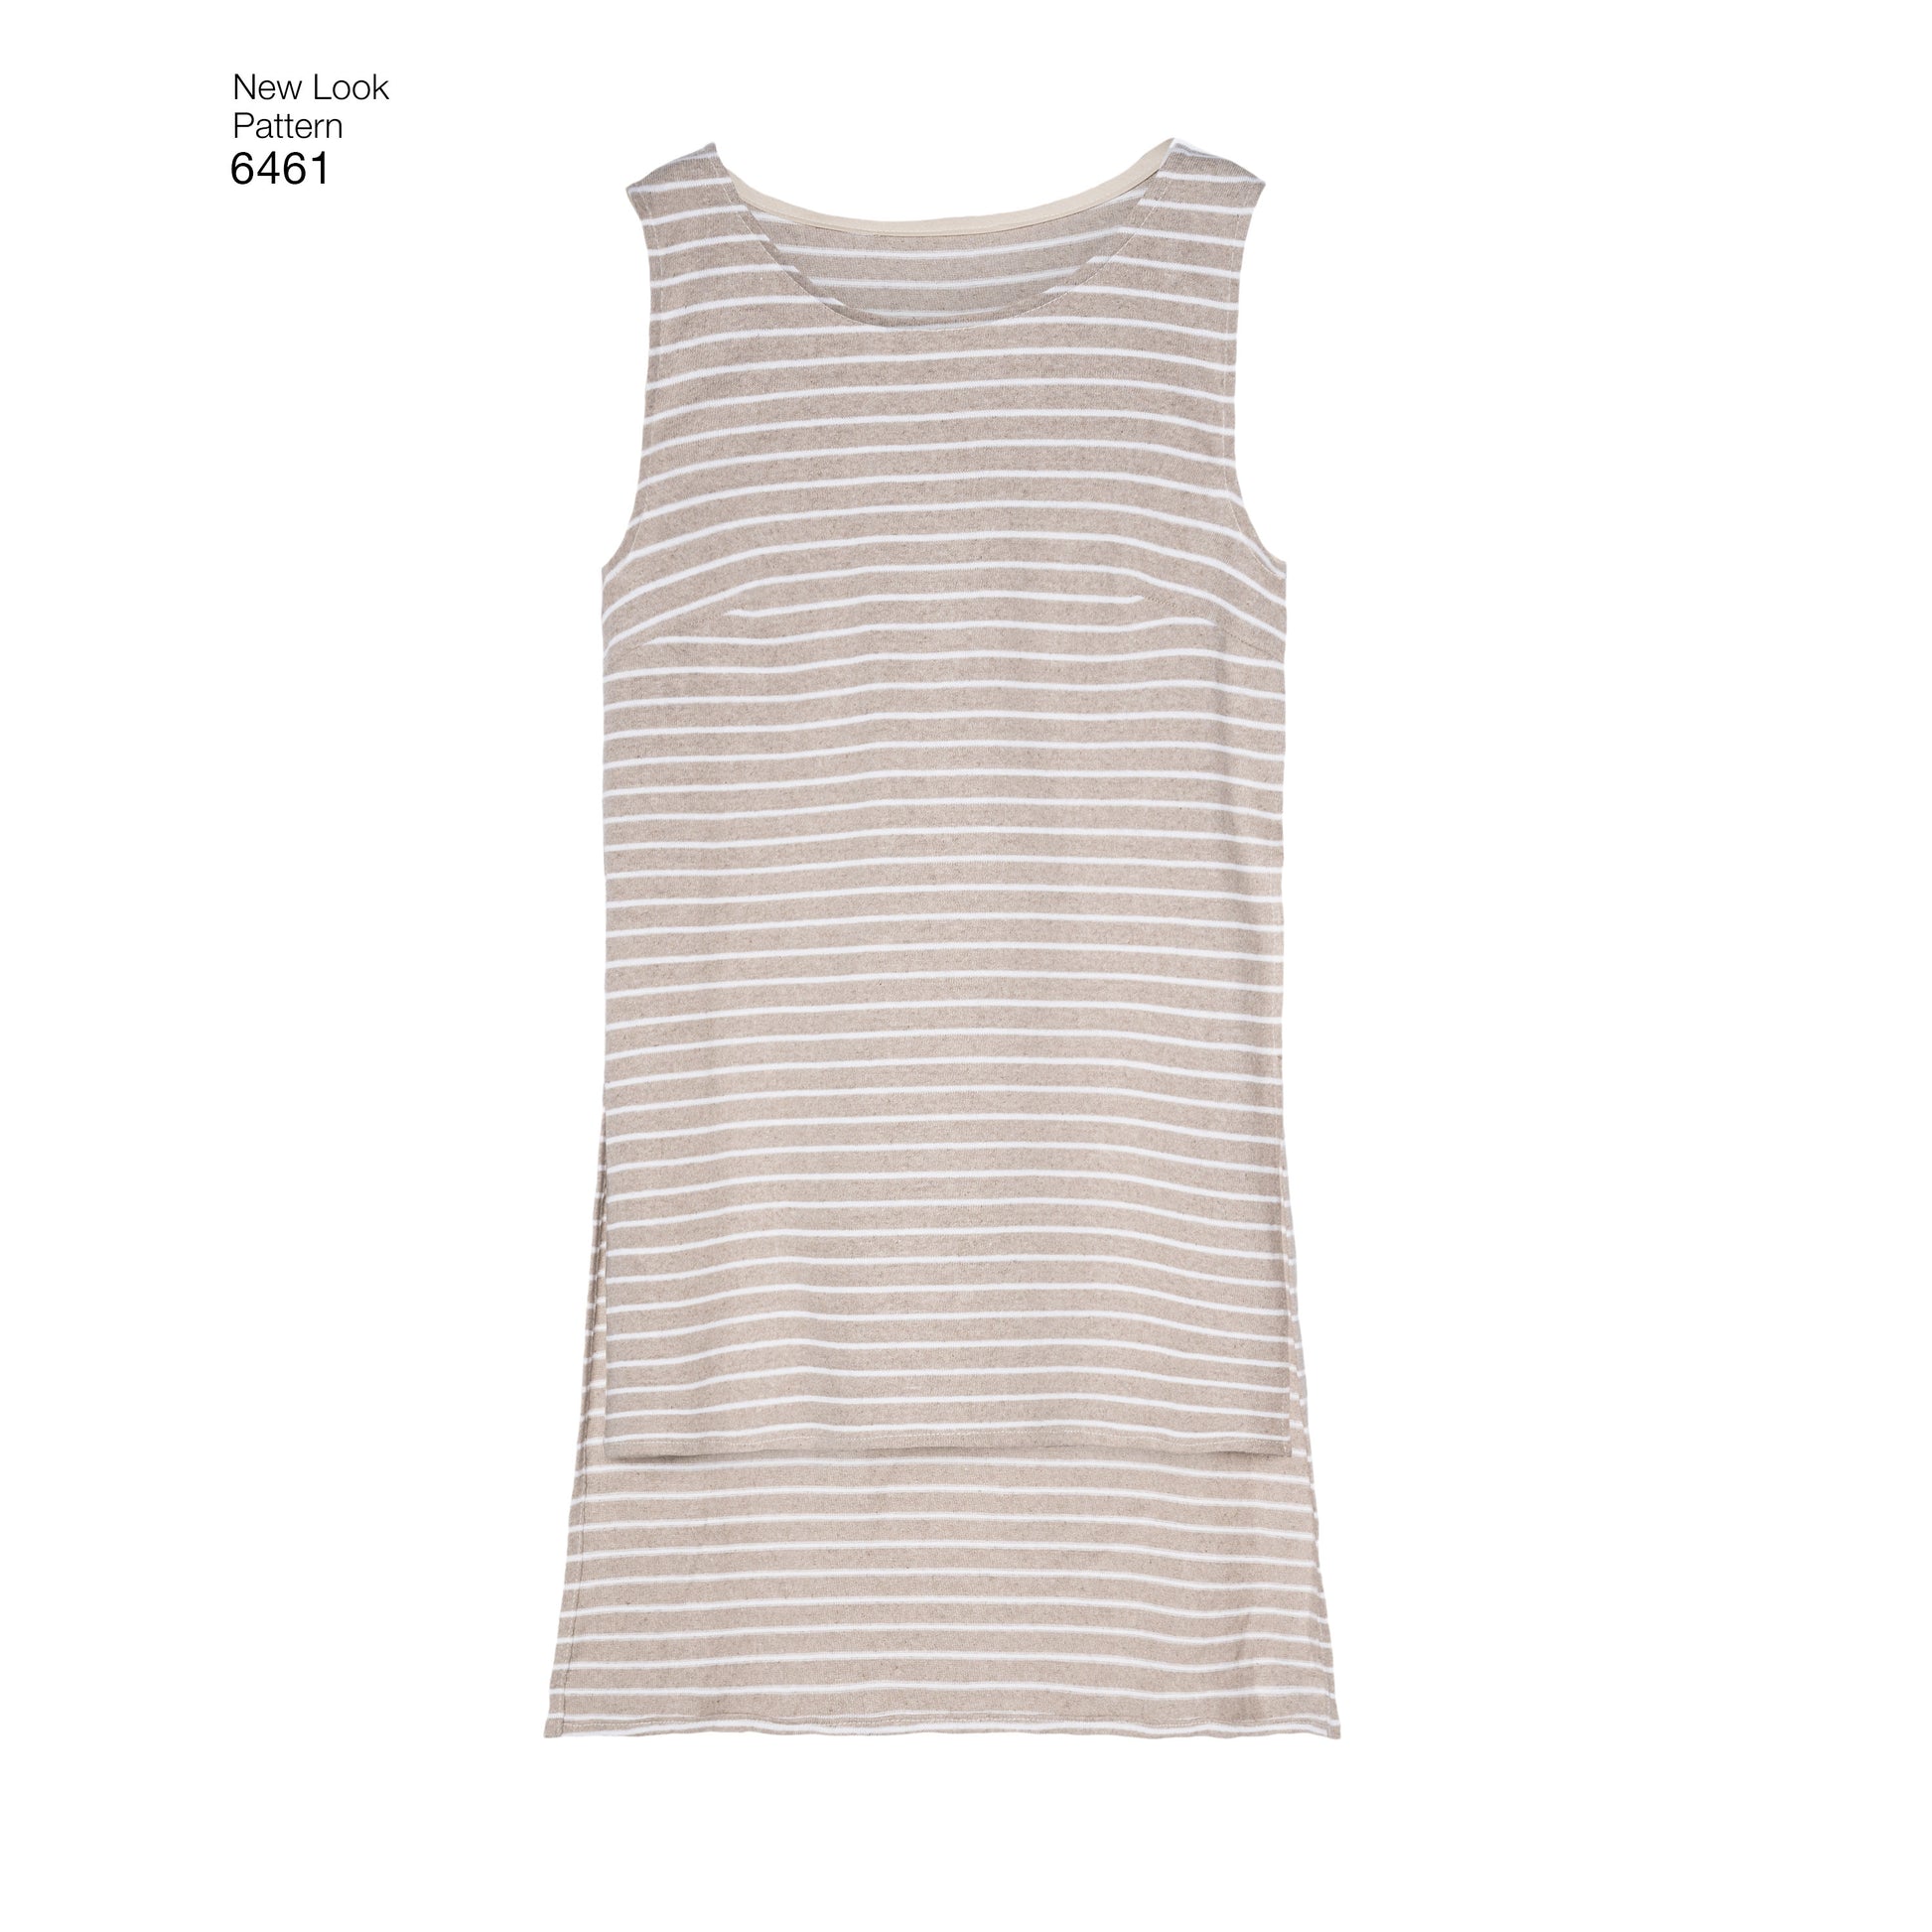 Symønster New Look 6461 - Kjole Topp Tunika Bukse Skjorte - Dame | Bilde 5